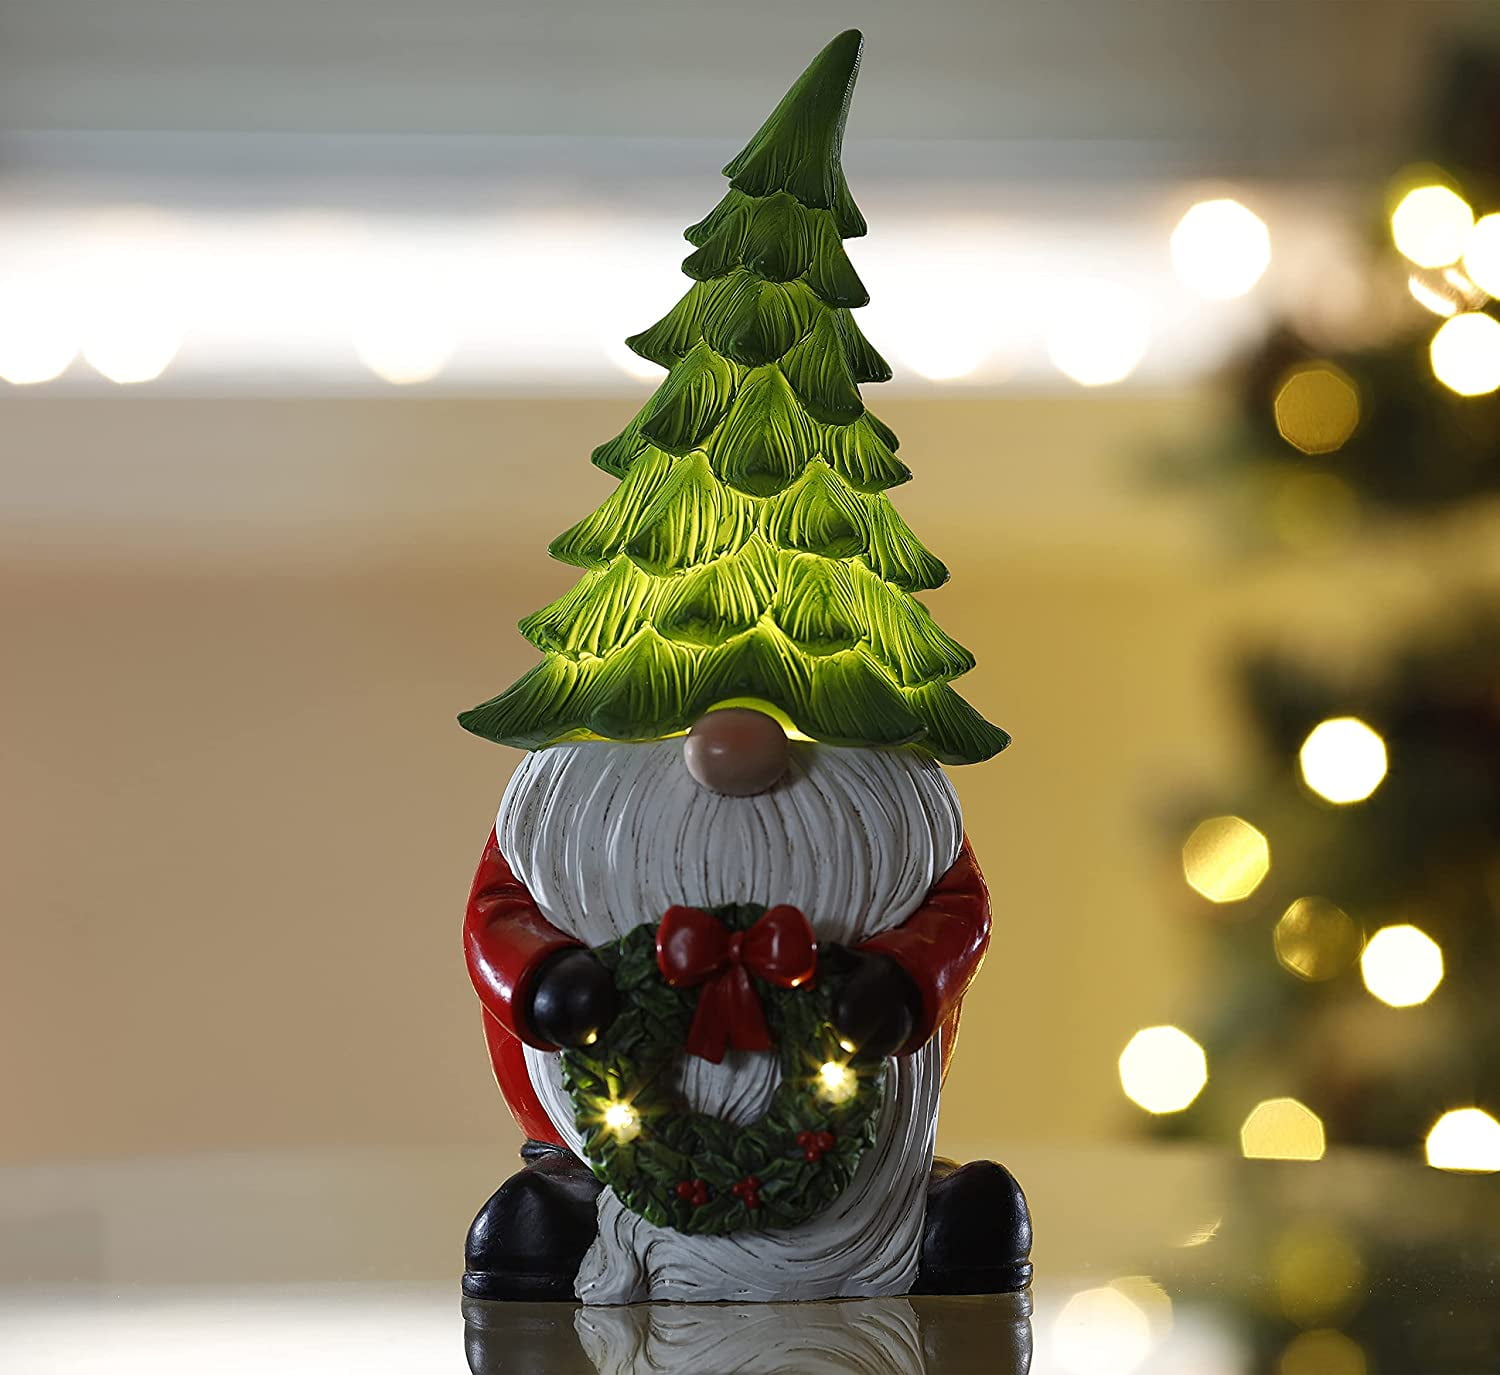 VP Home Christmas Cottage Snowman Decor Figurines, LED Light Up